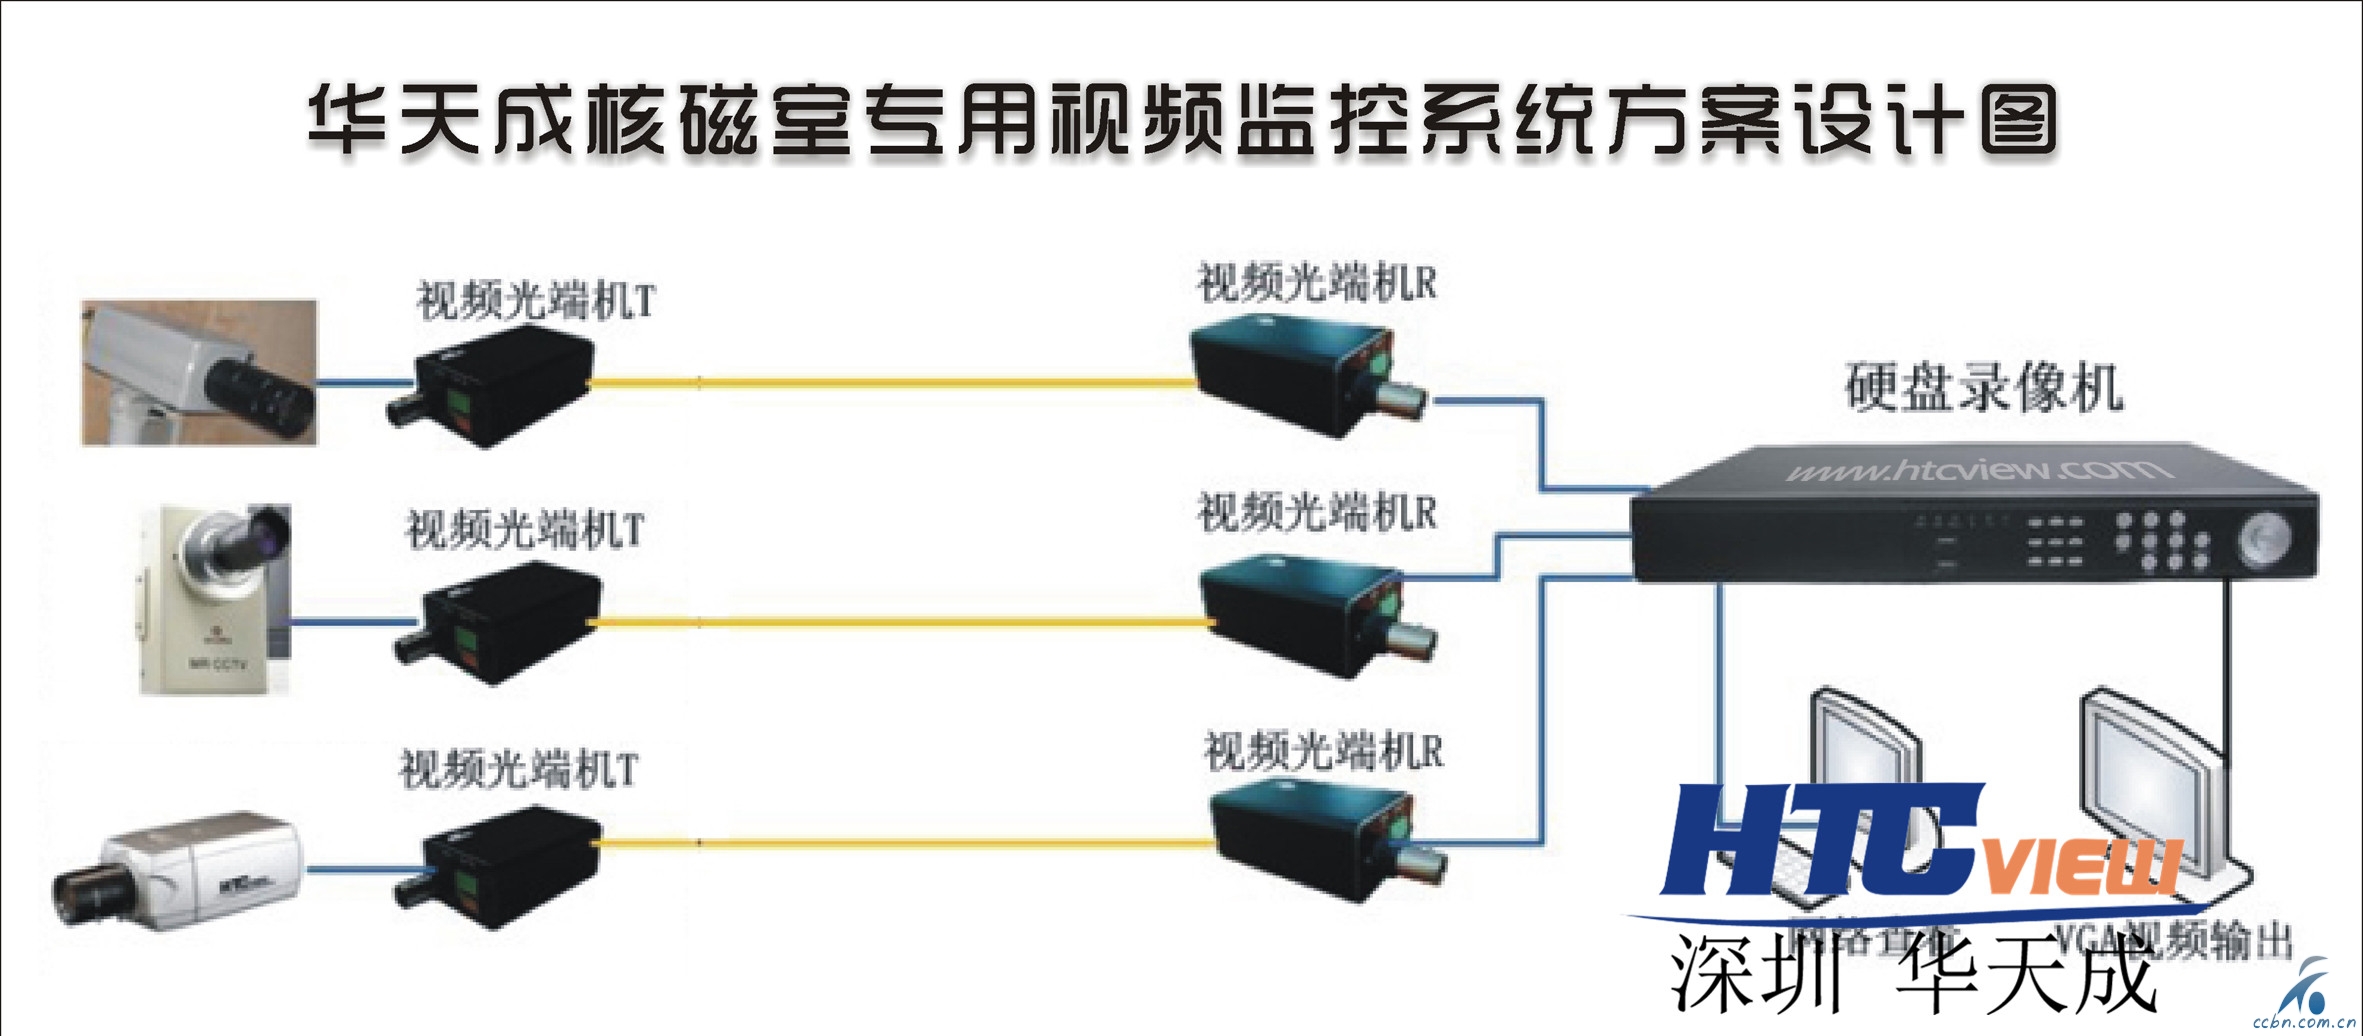 VGA光端机视频监控方案2.jpg